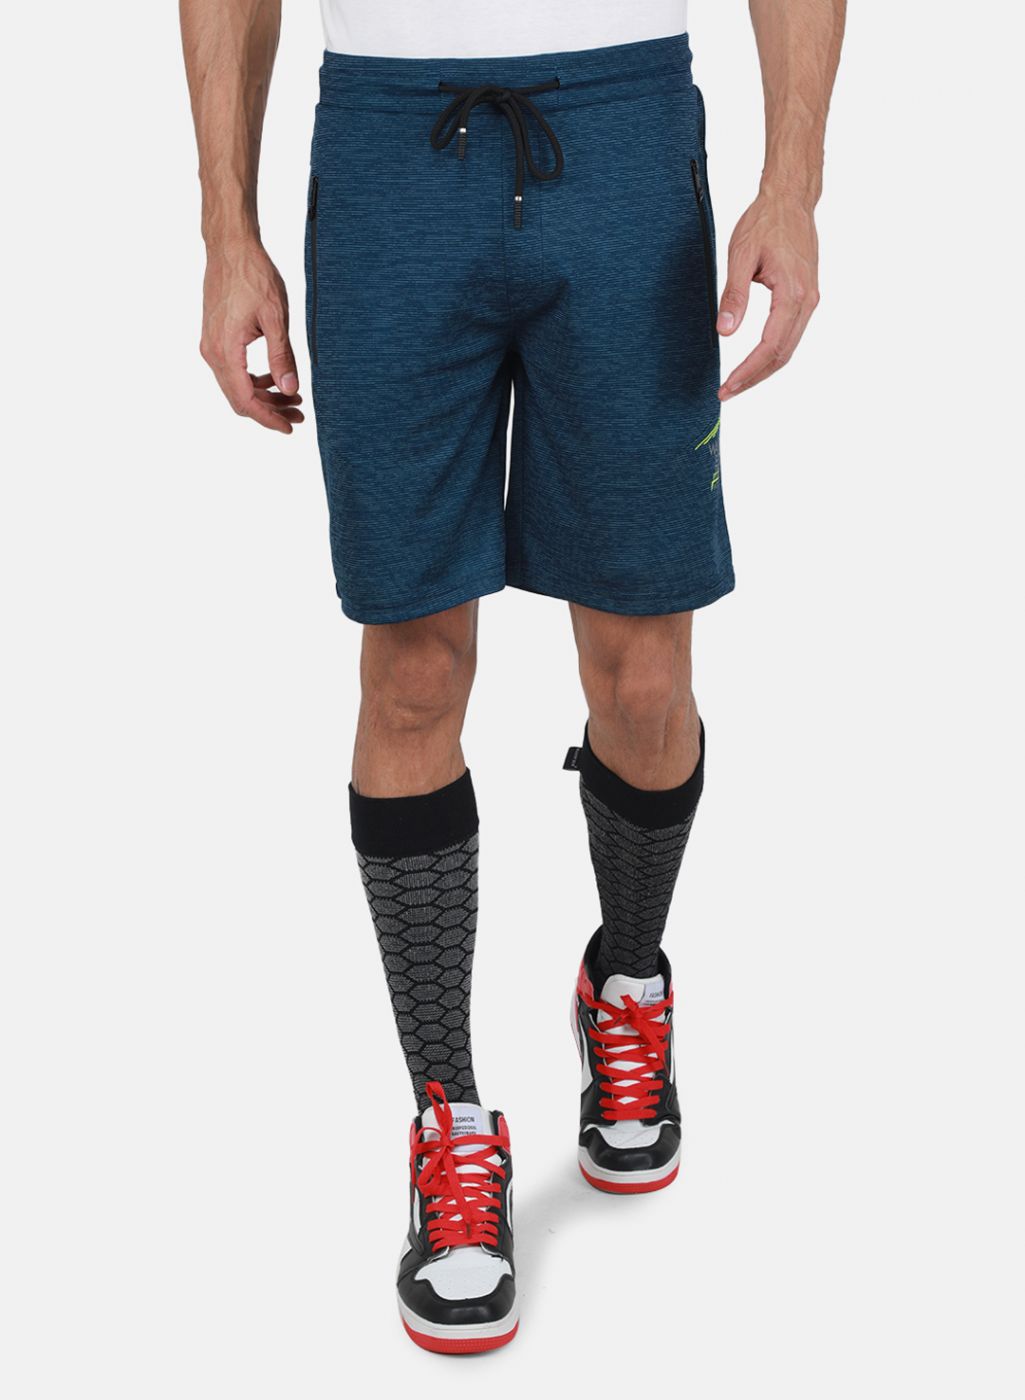 EKLENTSON Capri Pants Men Workout Pants Below Knee Shorts Capri Jogger –  EveryMarket